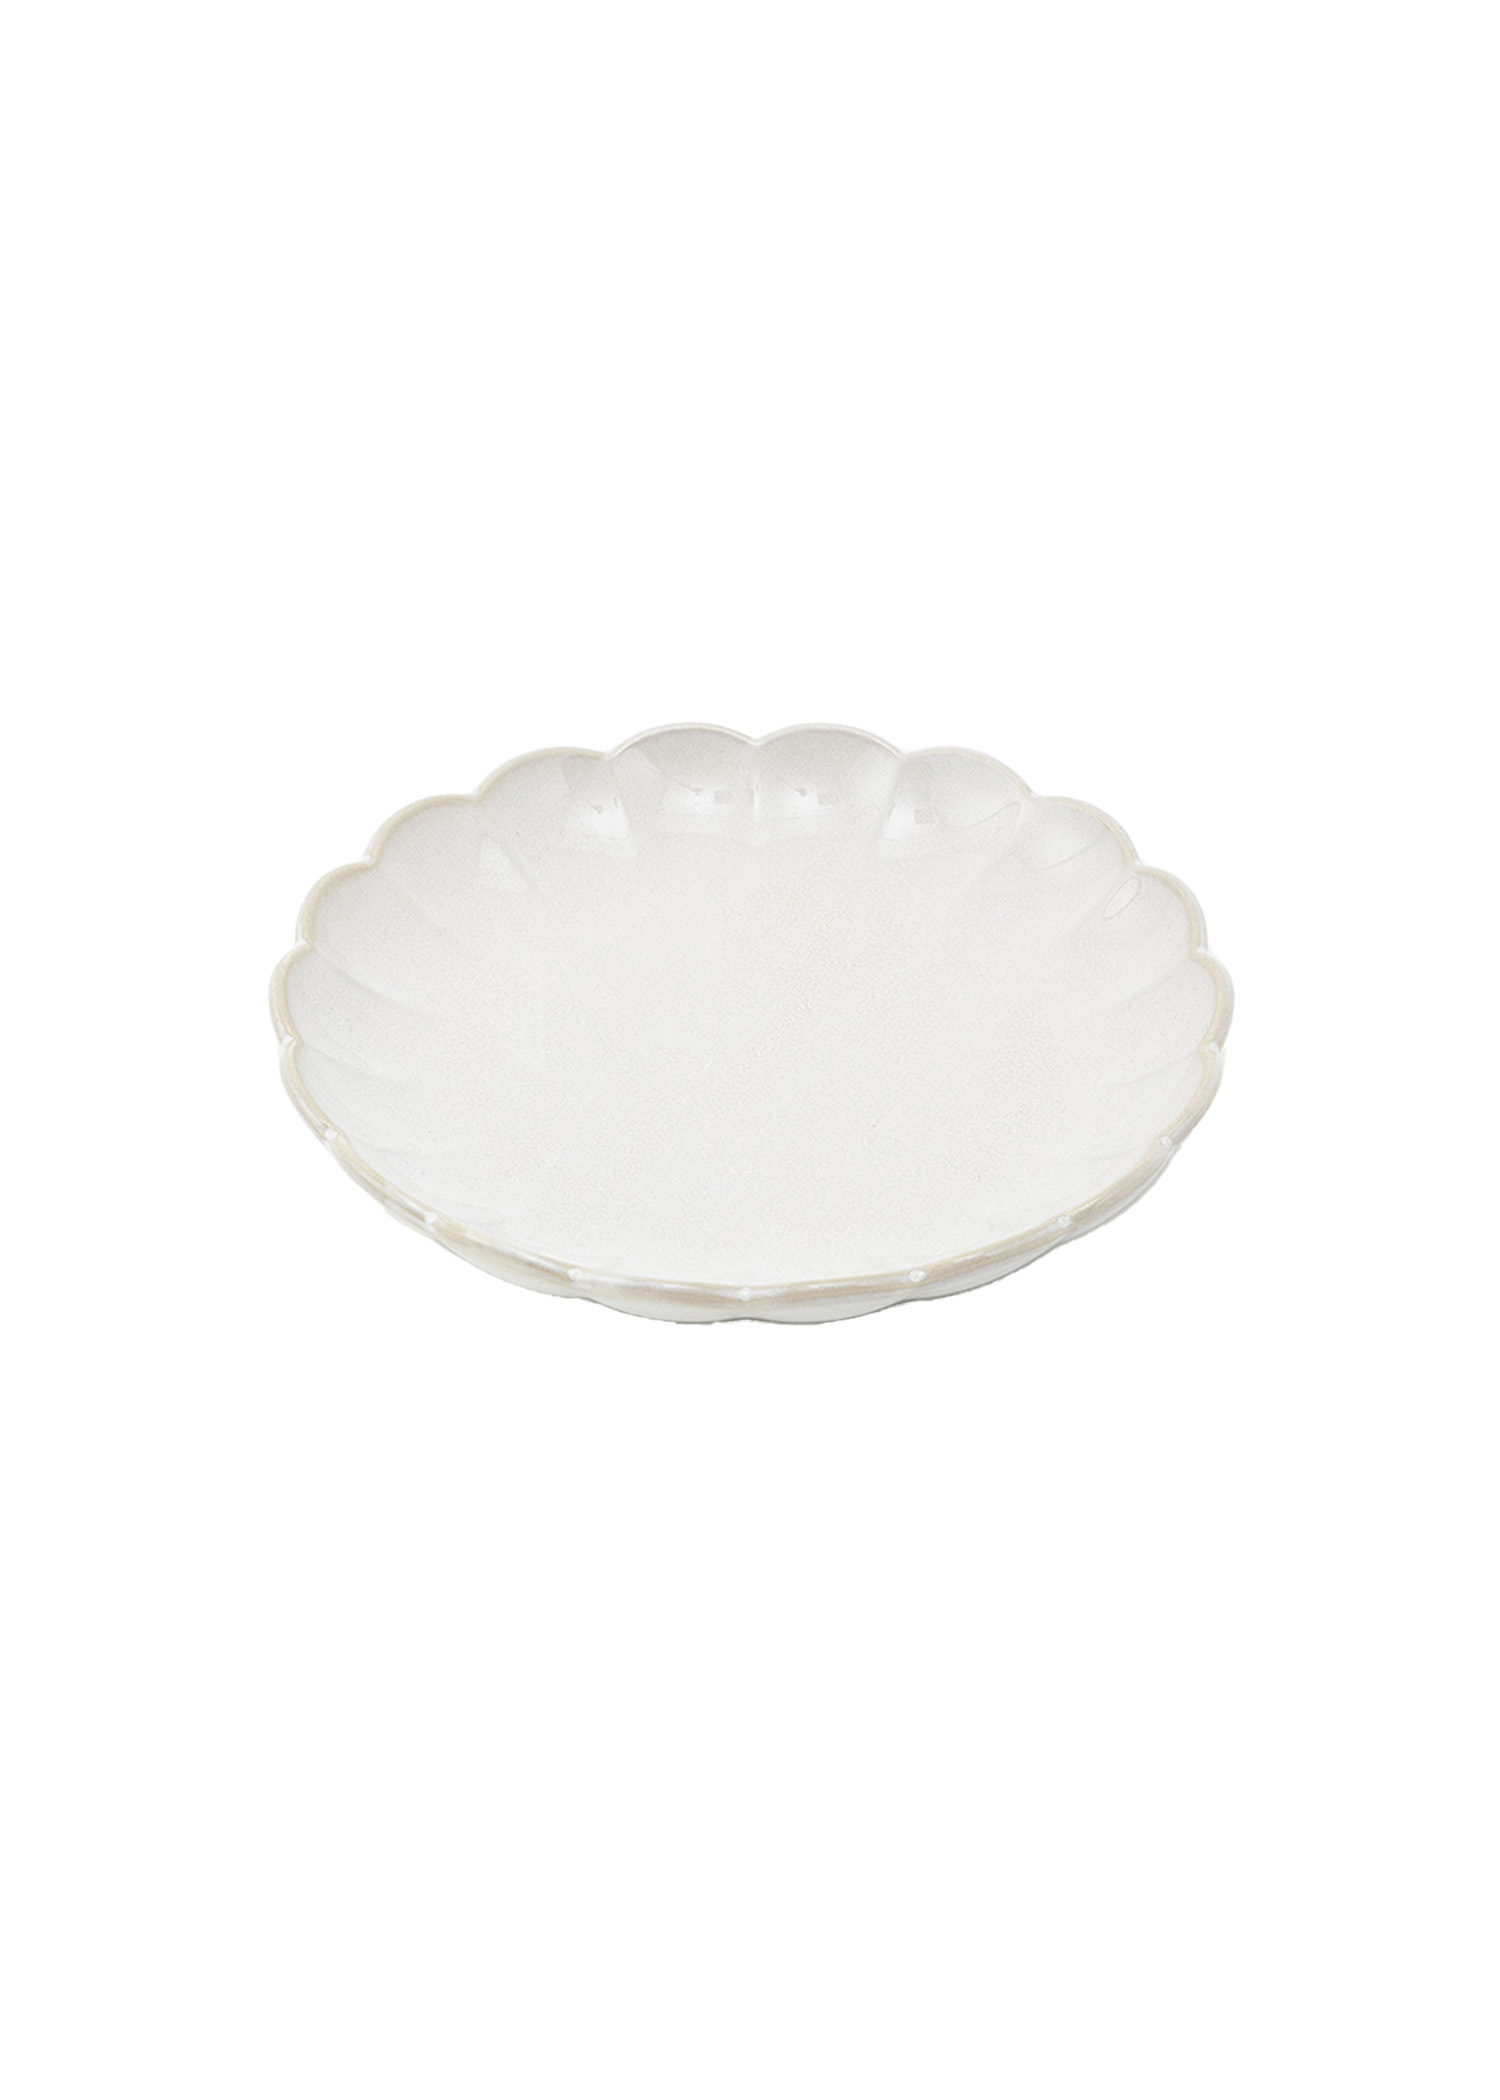 White stoneware side plate